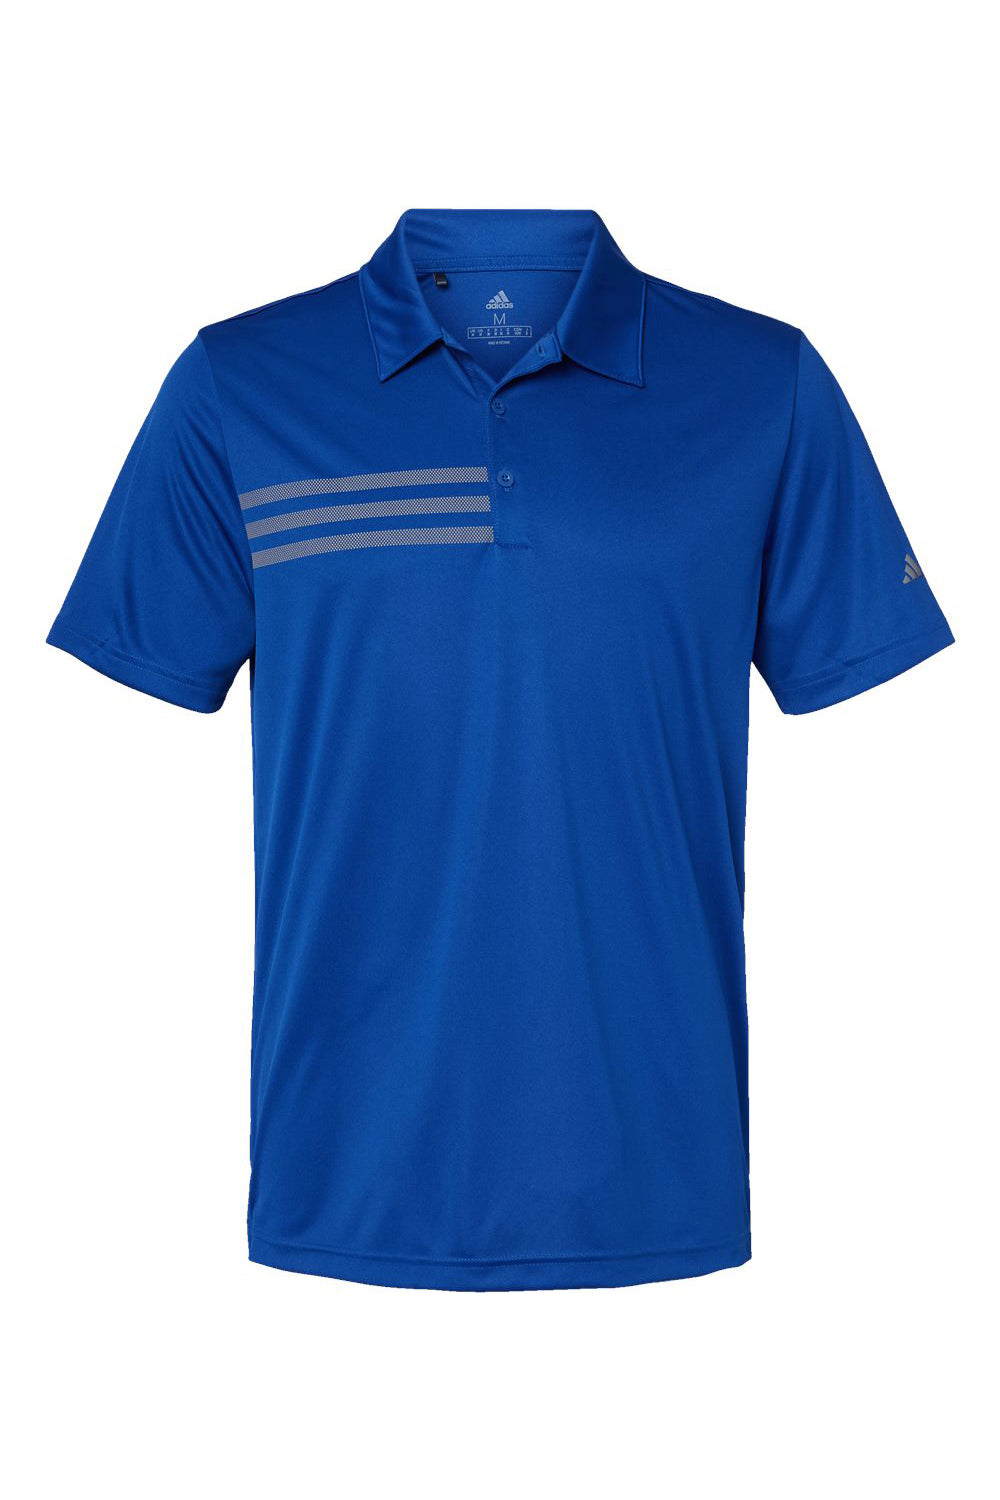 Adidas A324 Mens 3 Stripes UPF 50+ Short Sleeve Polo Shirt Collegiate Royal Blue/Grey Flat Front